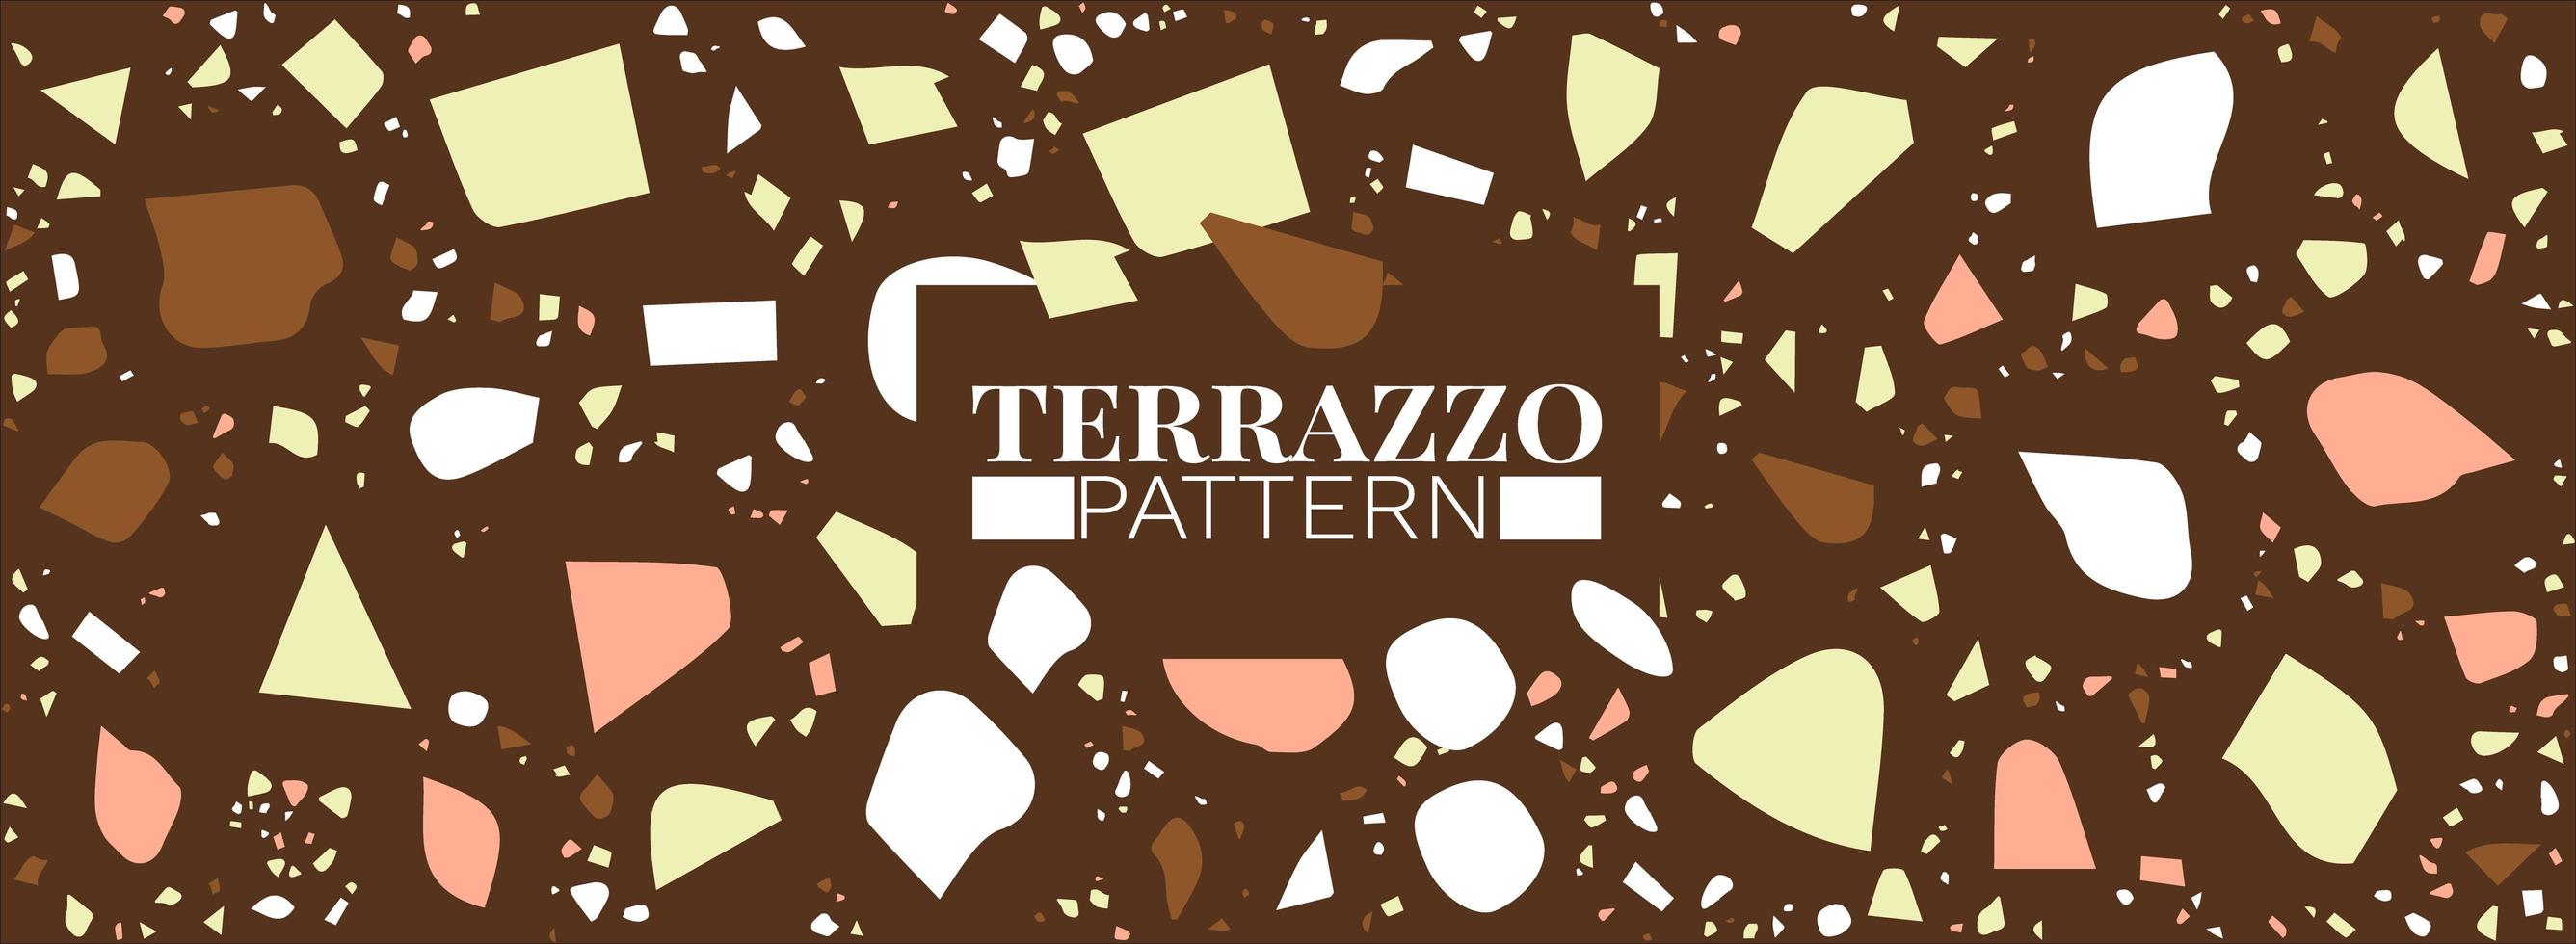 Terrazzo Background- Terrazzo Floor Tile Pattern Abstract Background Free Vector